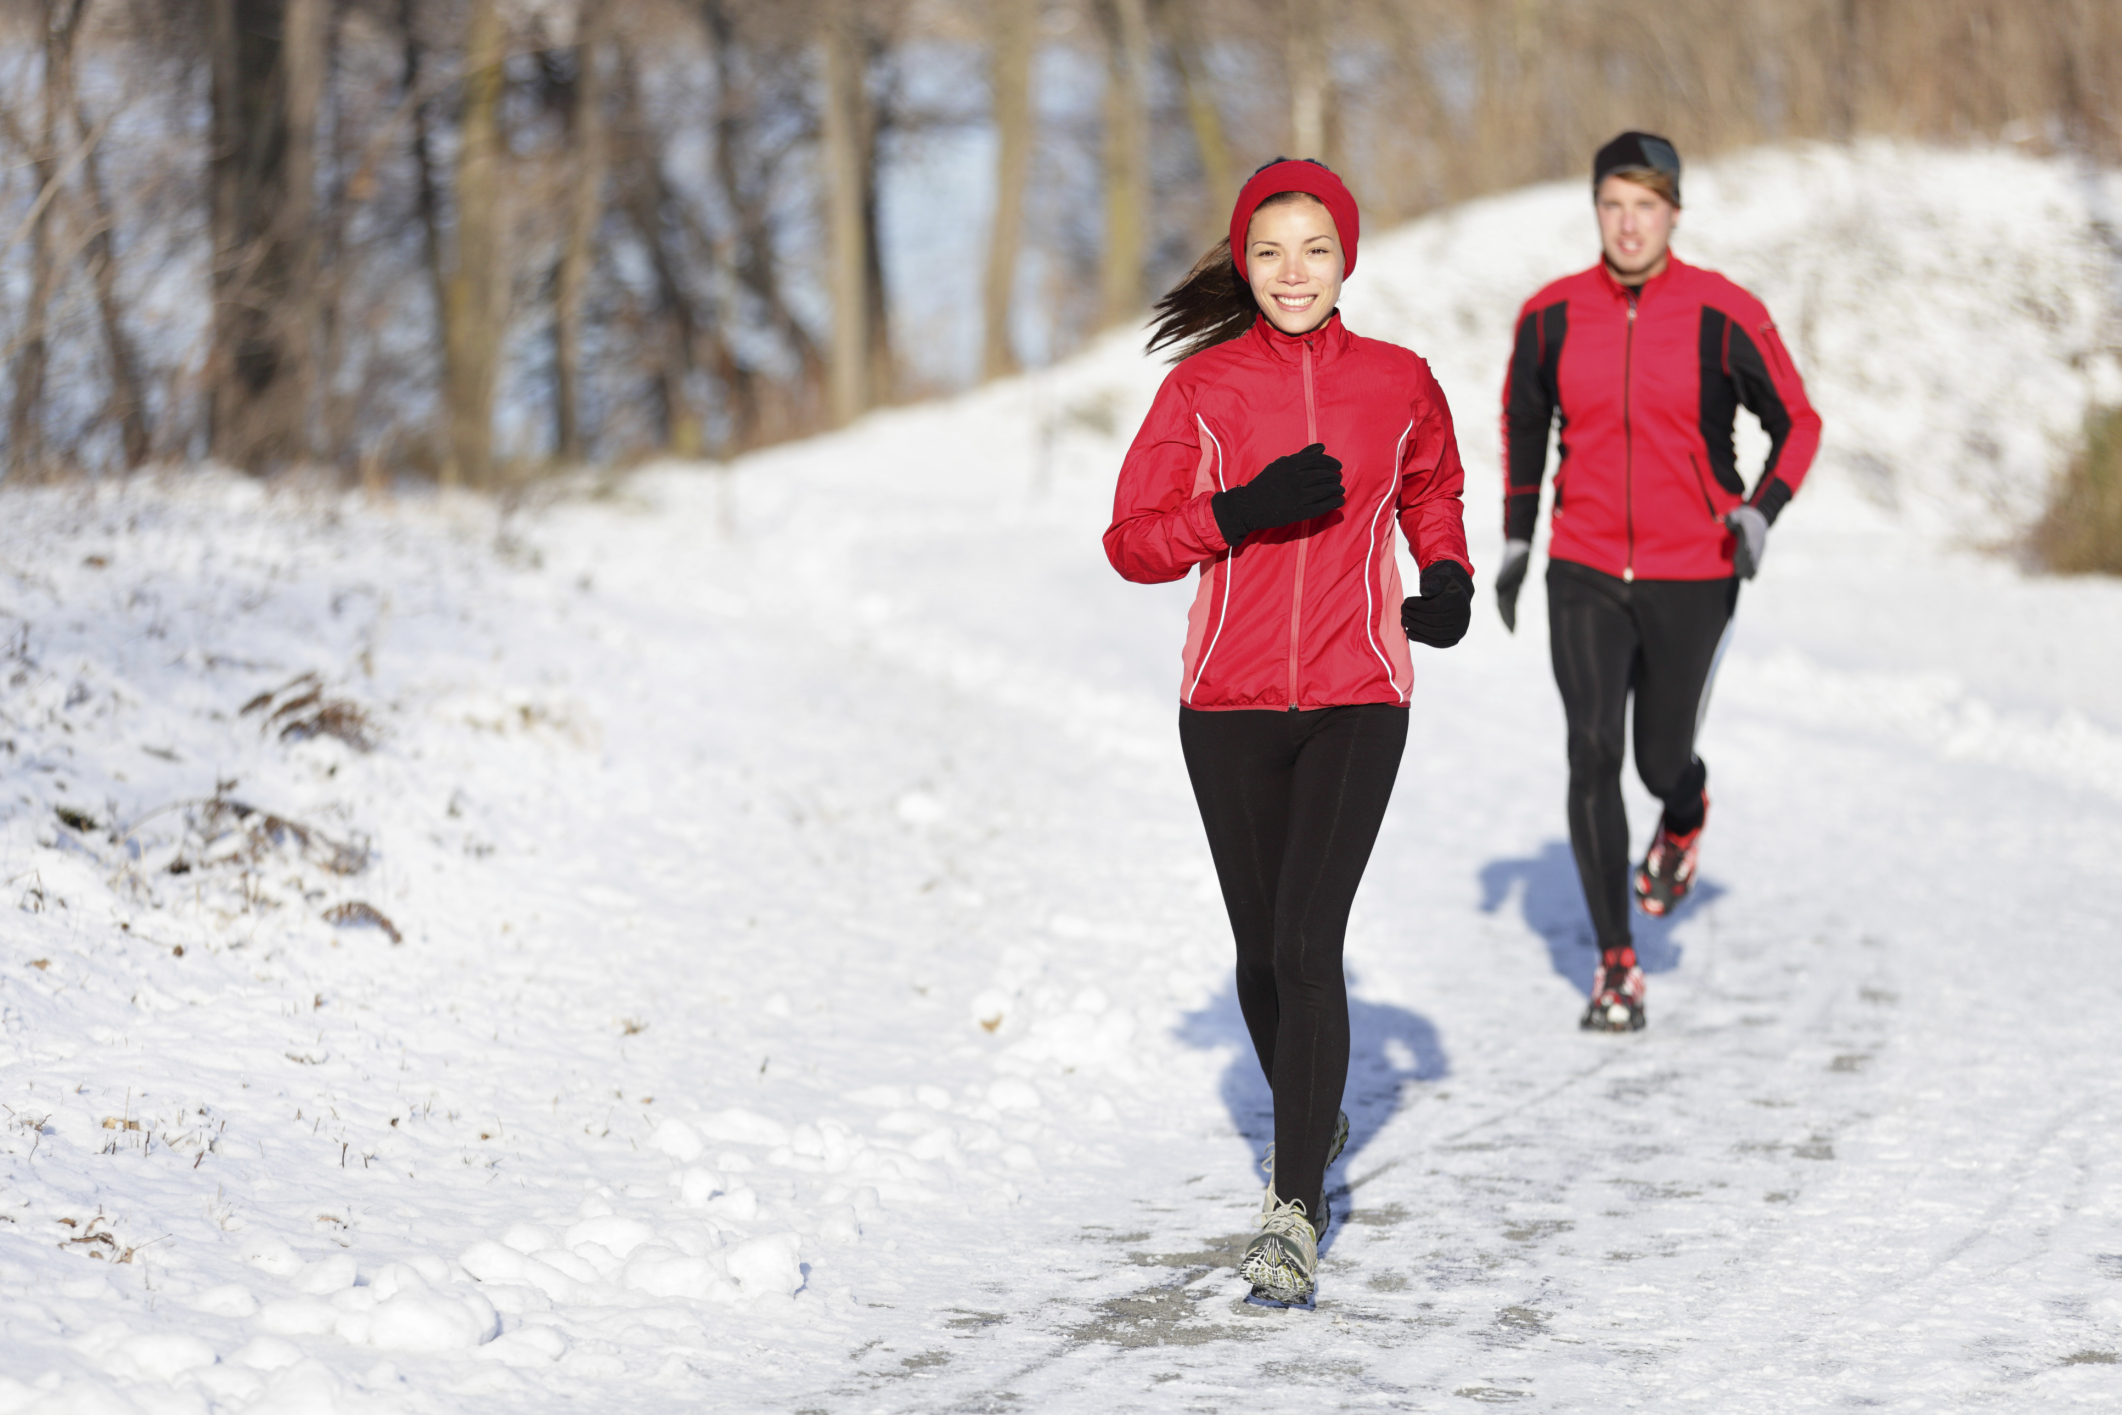 Do sport the winter. Бег зимой. Одежда для бега. Одежда для пробежки зимой. Одежда для бега зимой.